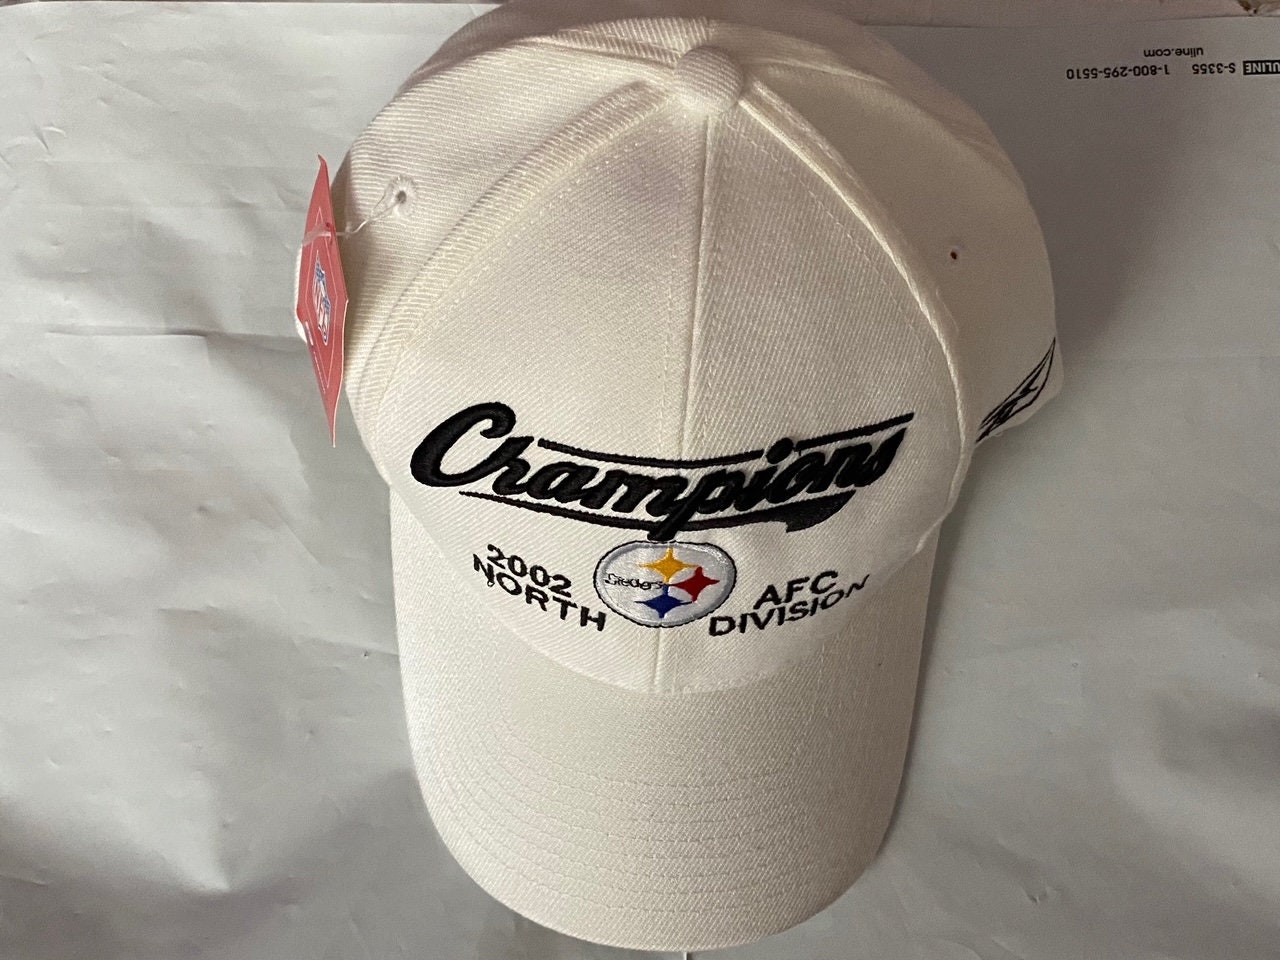 Vintage Pittsburgh Steelers Hat Cap NFL 2002 North AFC Division Champions  Reebok